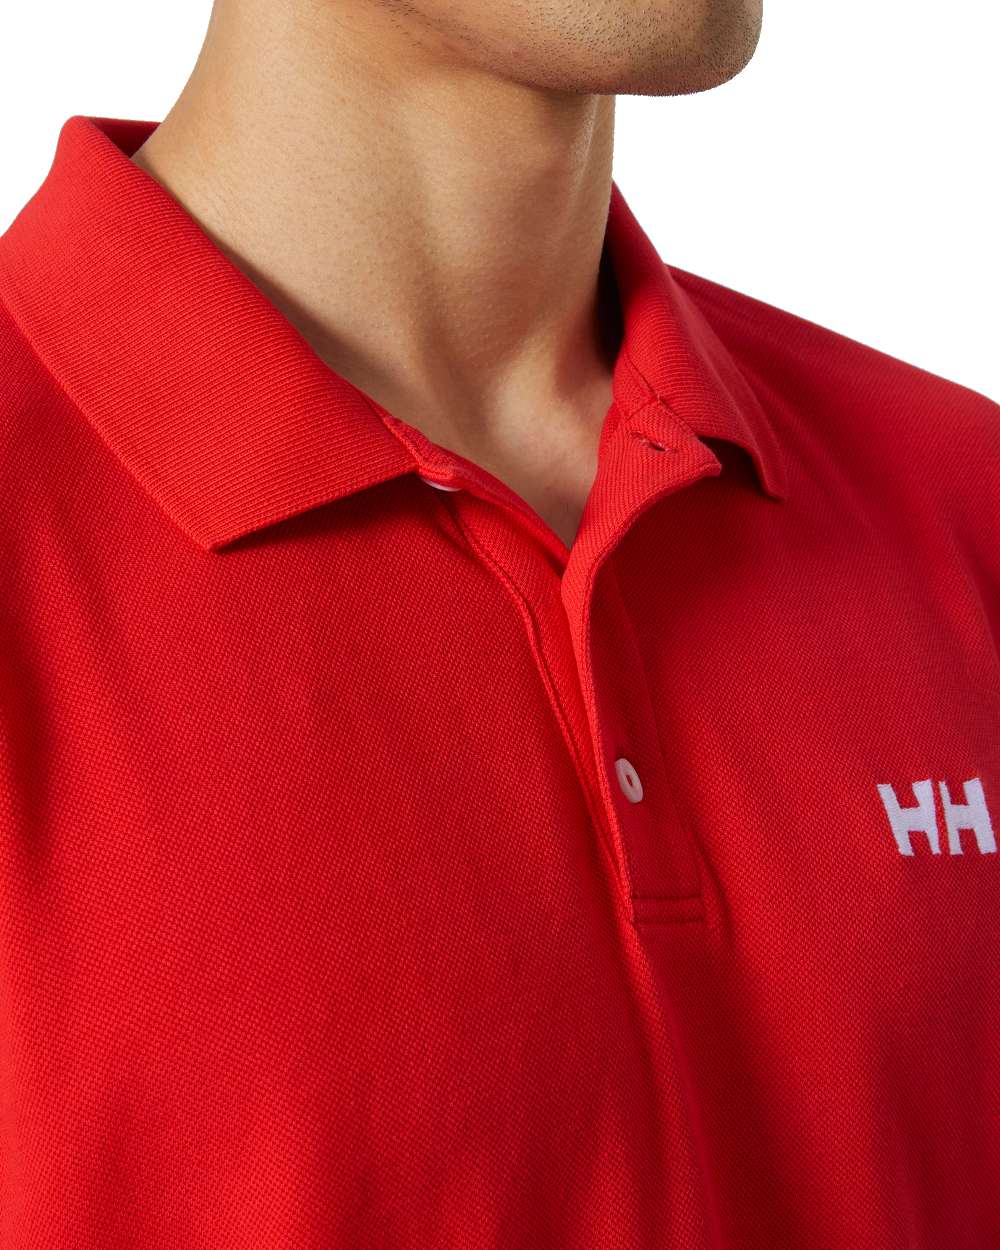 Alert Red coloured Helly Hansen Mens Malcesine Polo T-Shirt on white background 